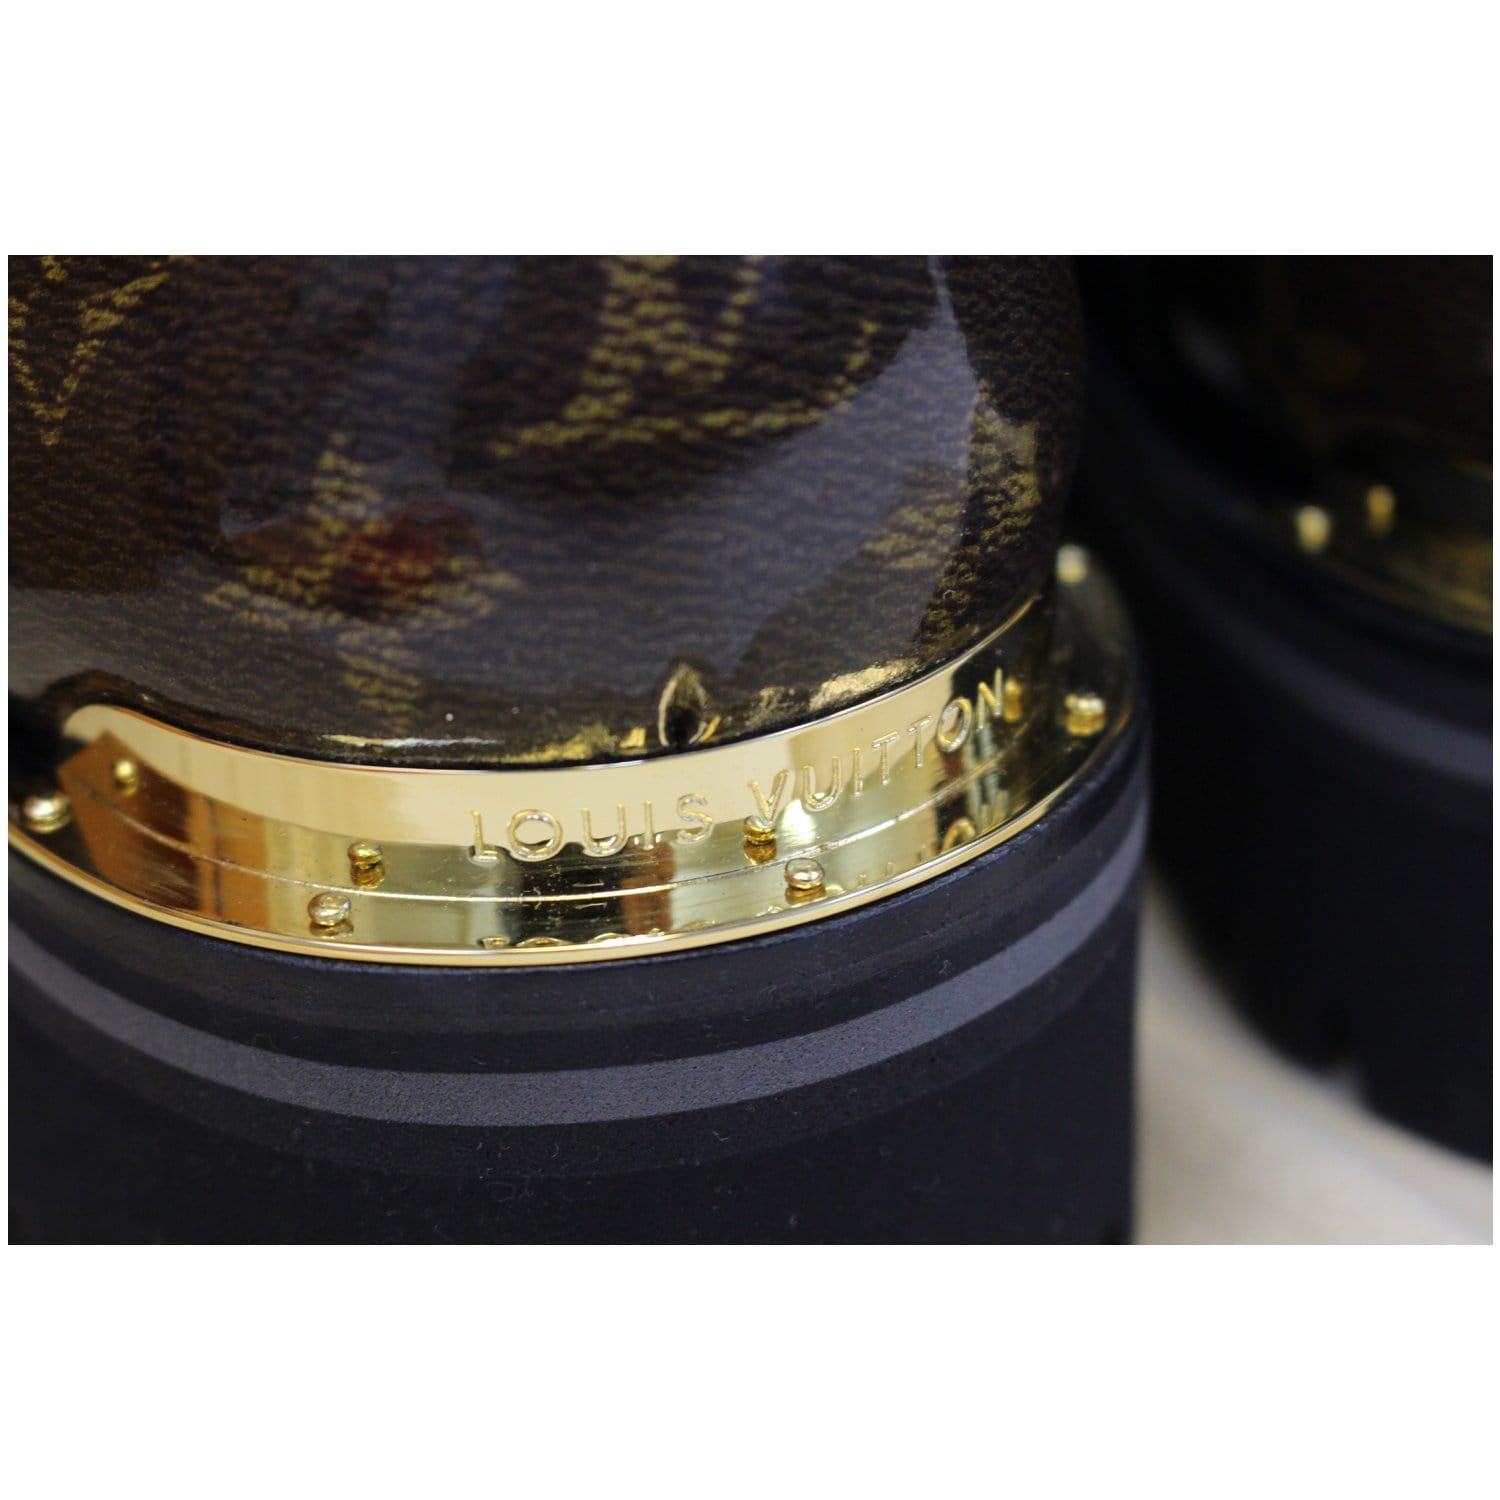 Louis Vuitton Men's LV Outland Boots